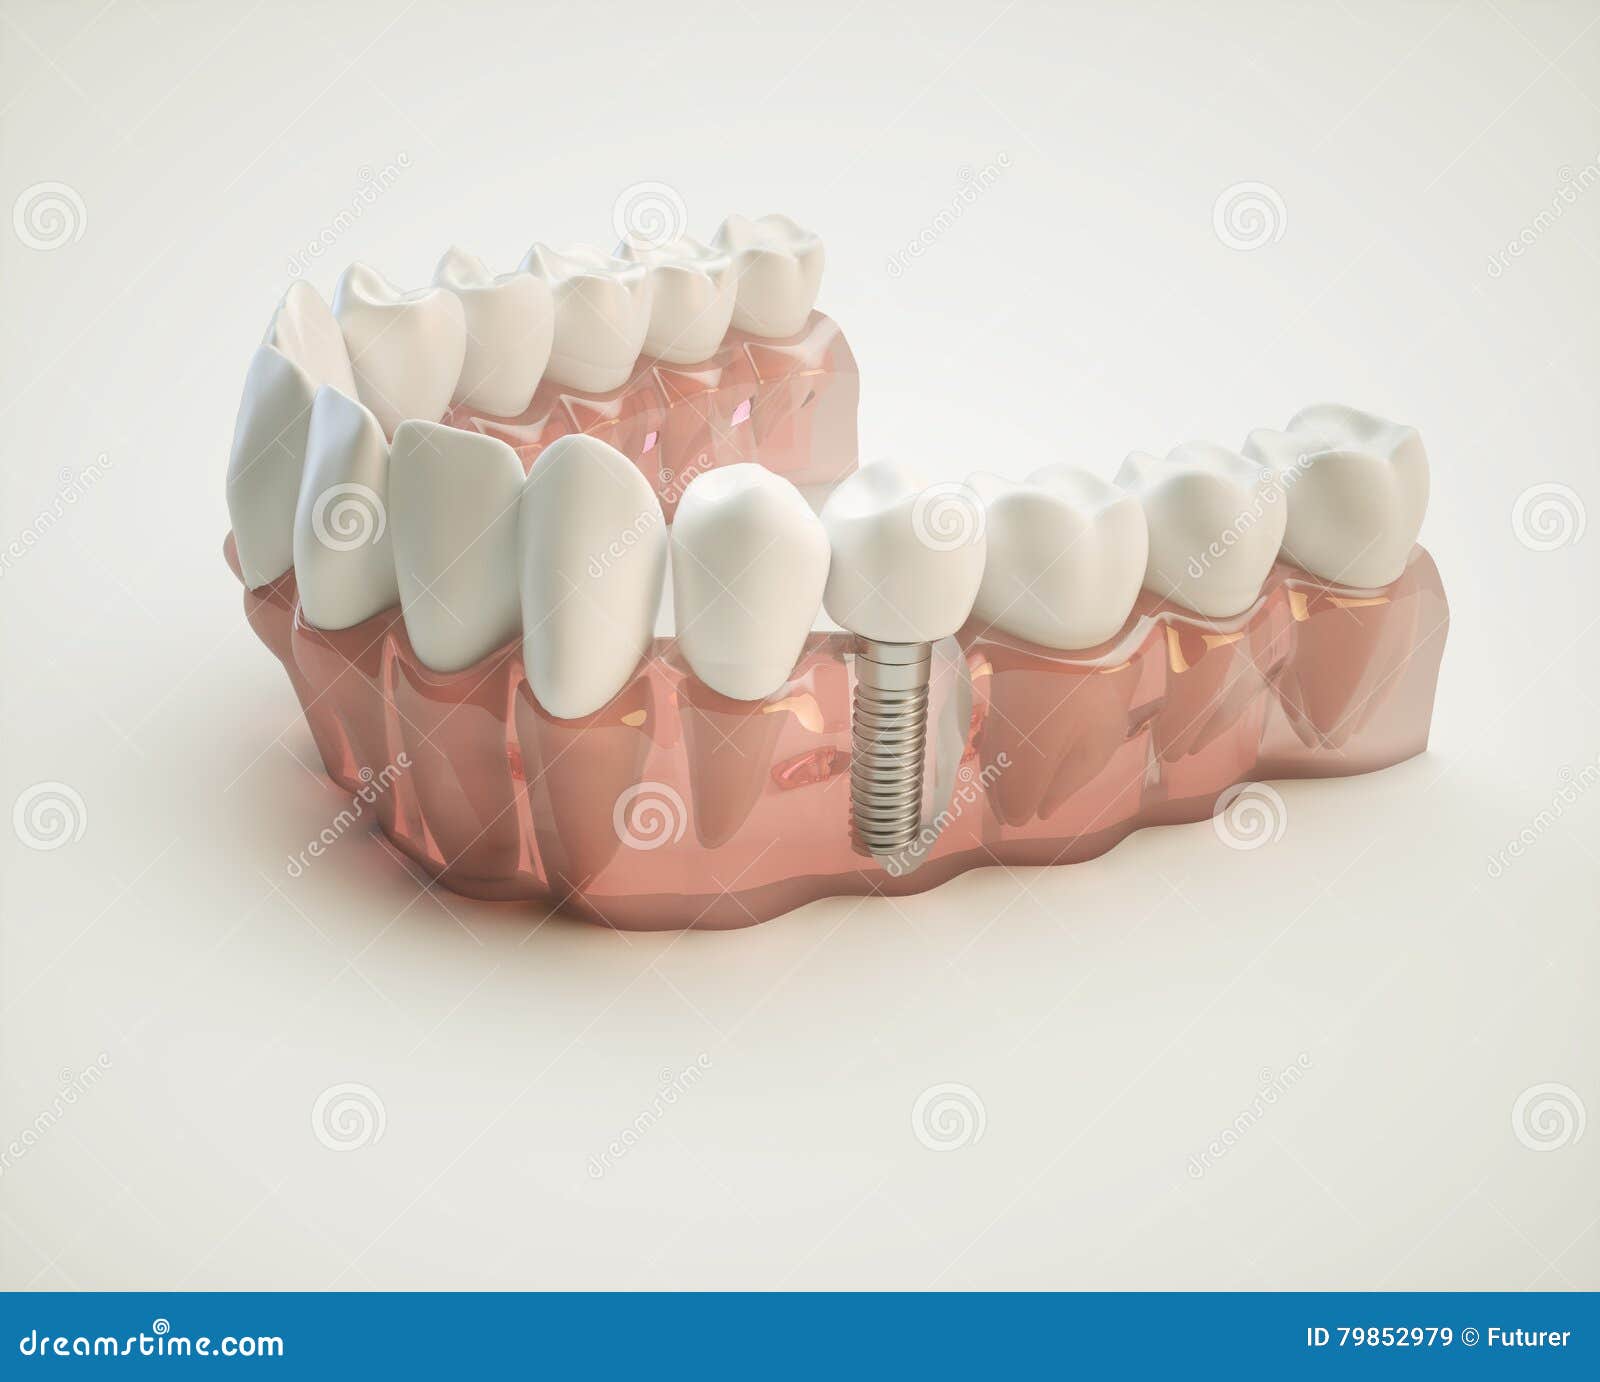 dental implant - 3d rendering